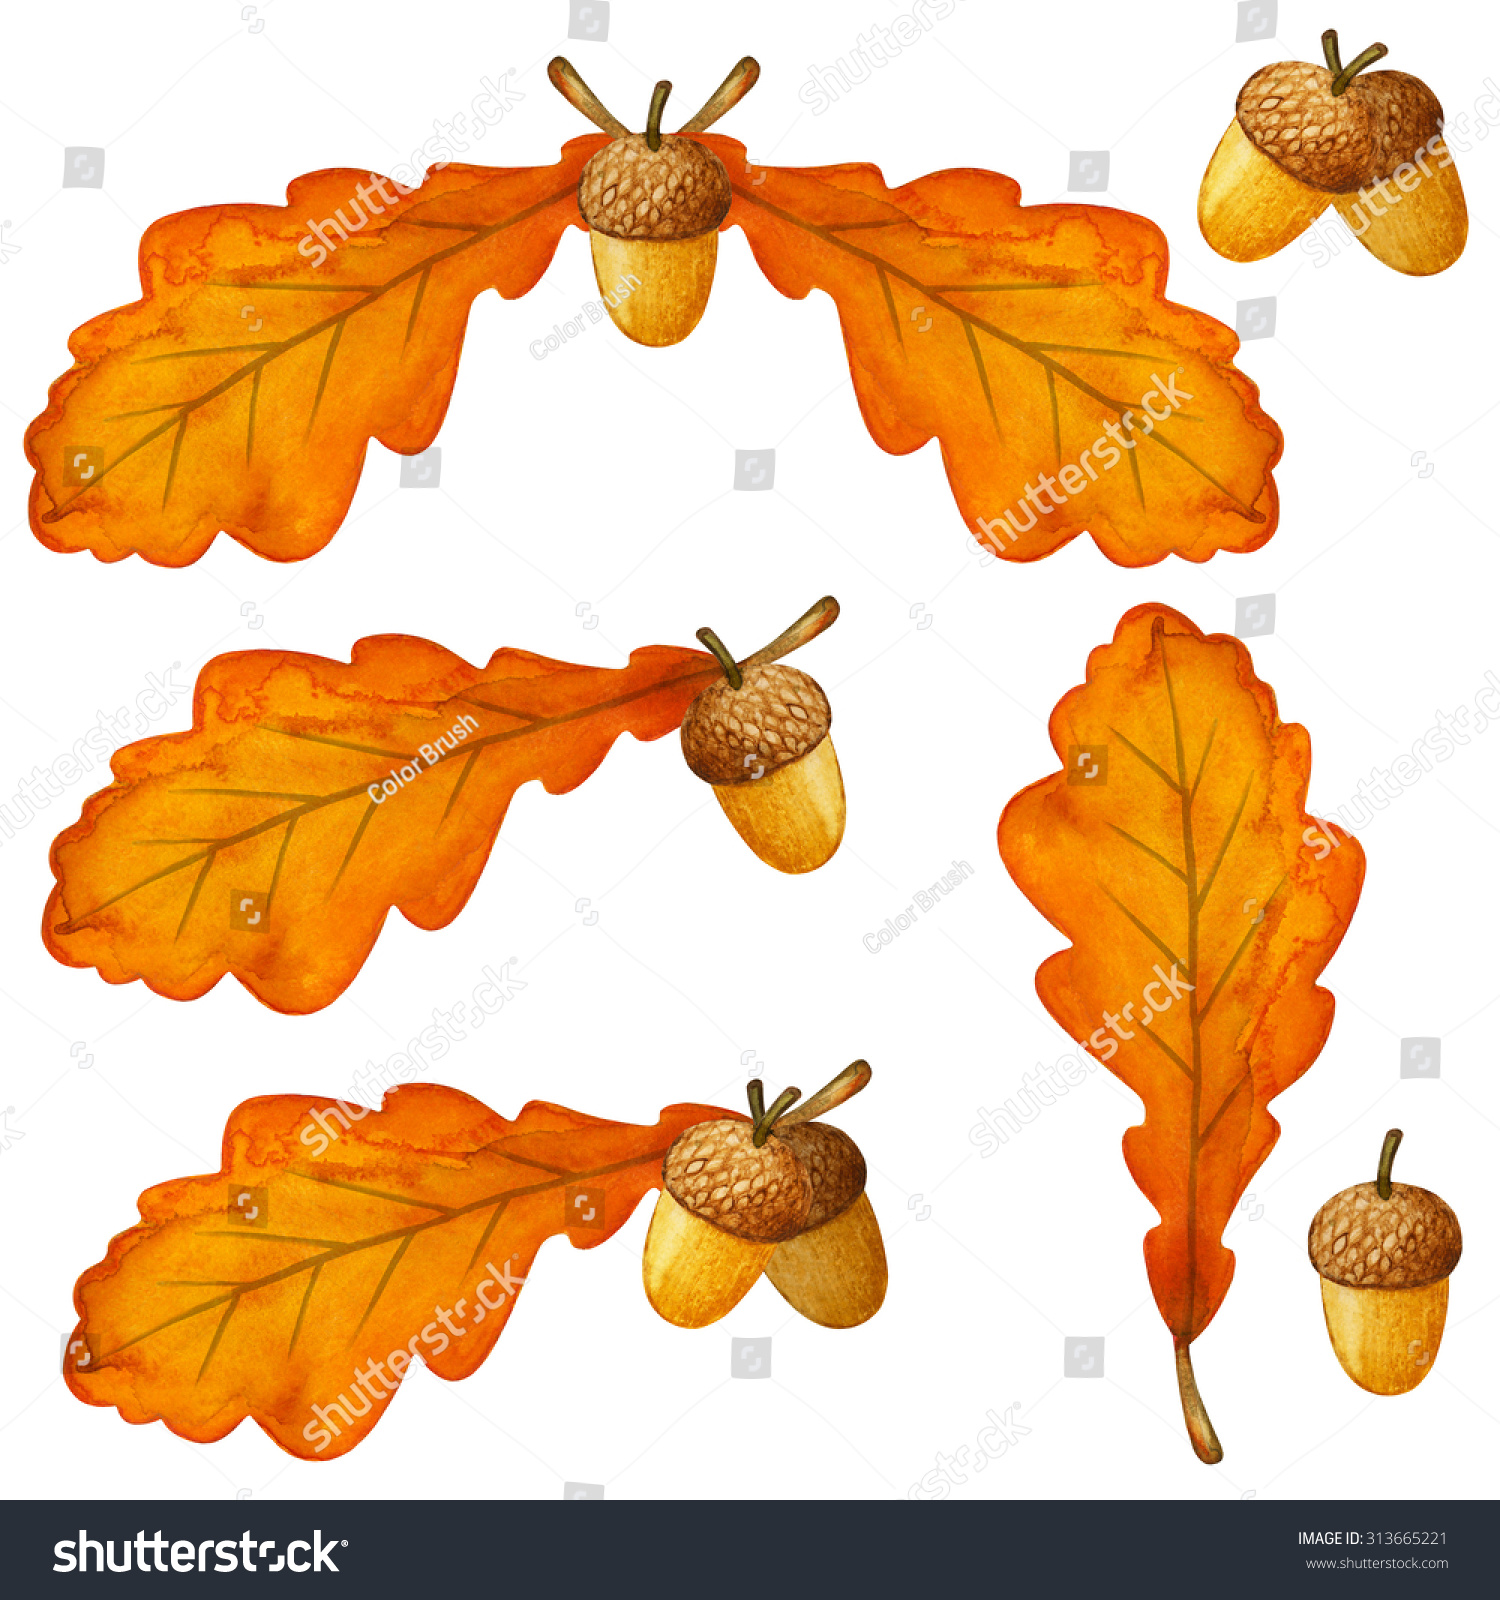 clipart acorns oak leaves - photo #21